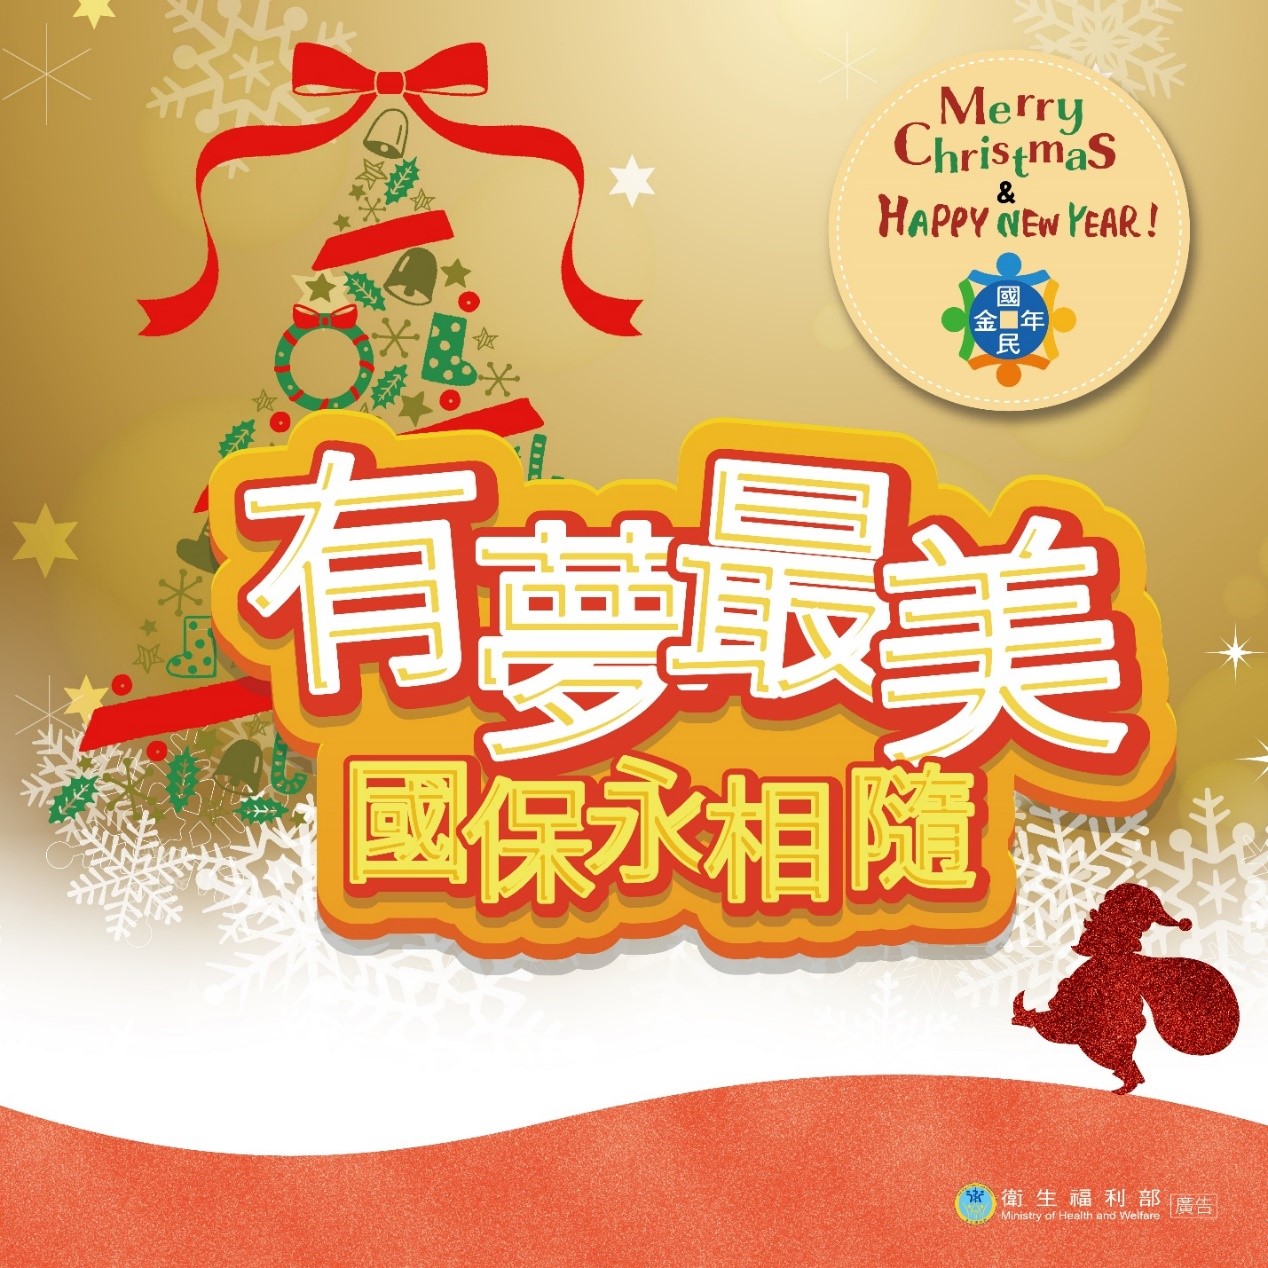 Merry Chrismas & Happy New Year 有夢最美 國保永相隨(橫式)